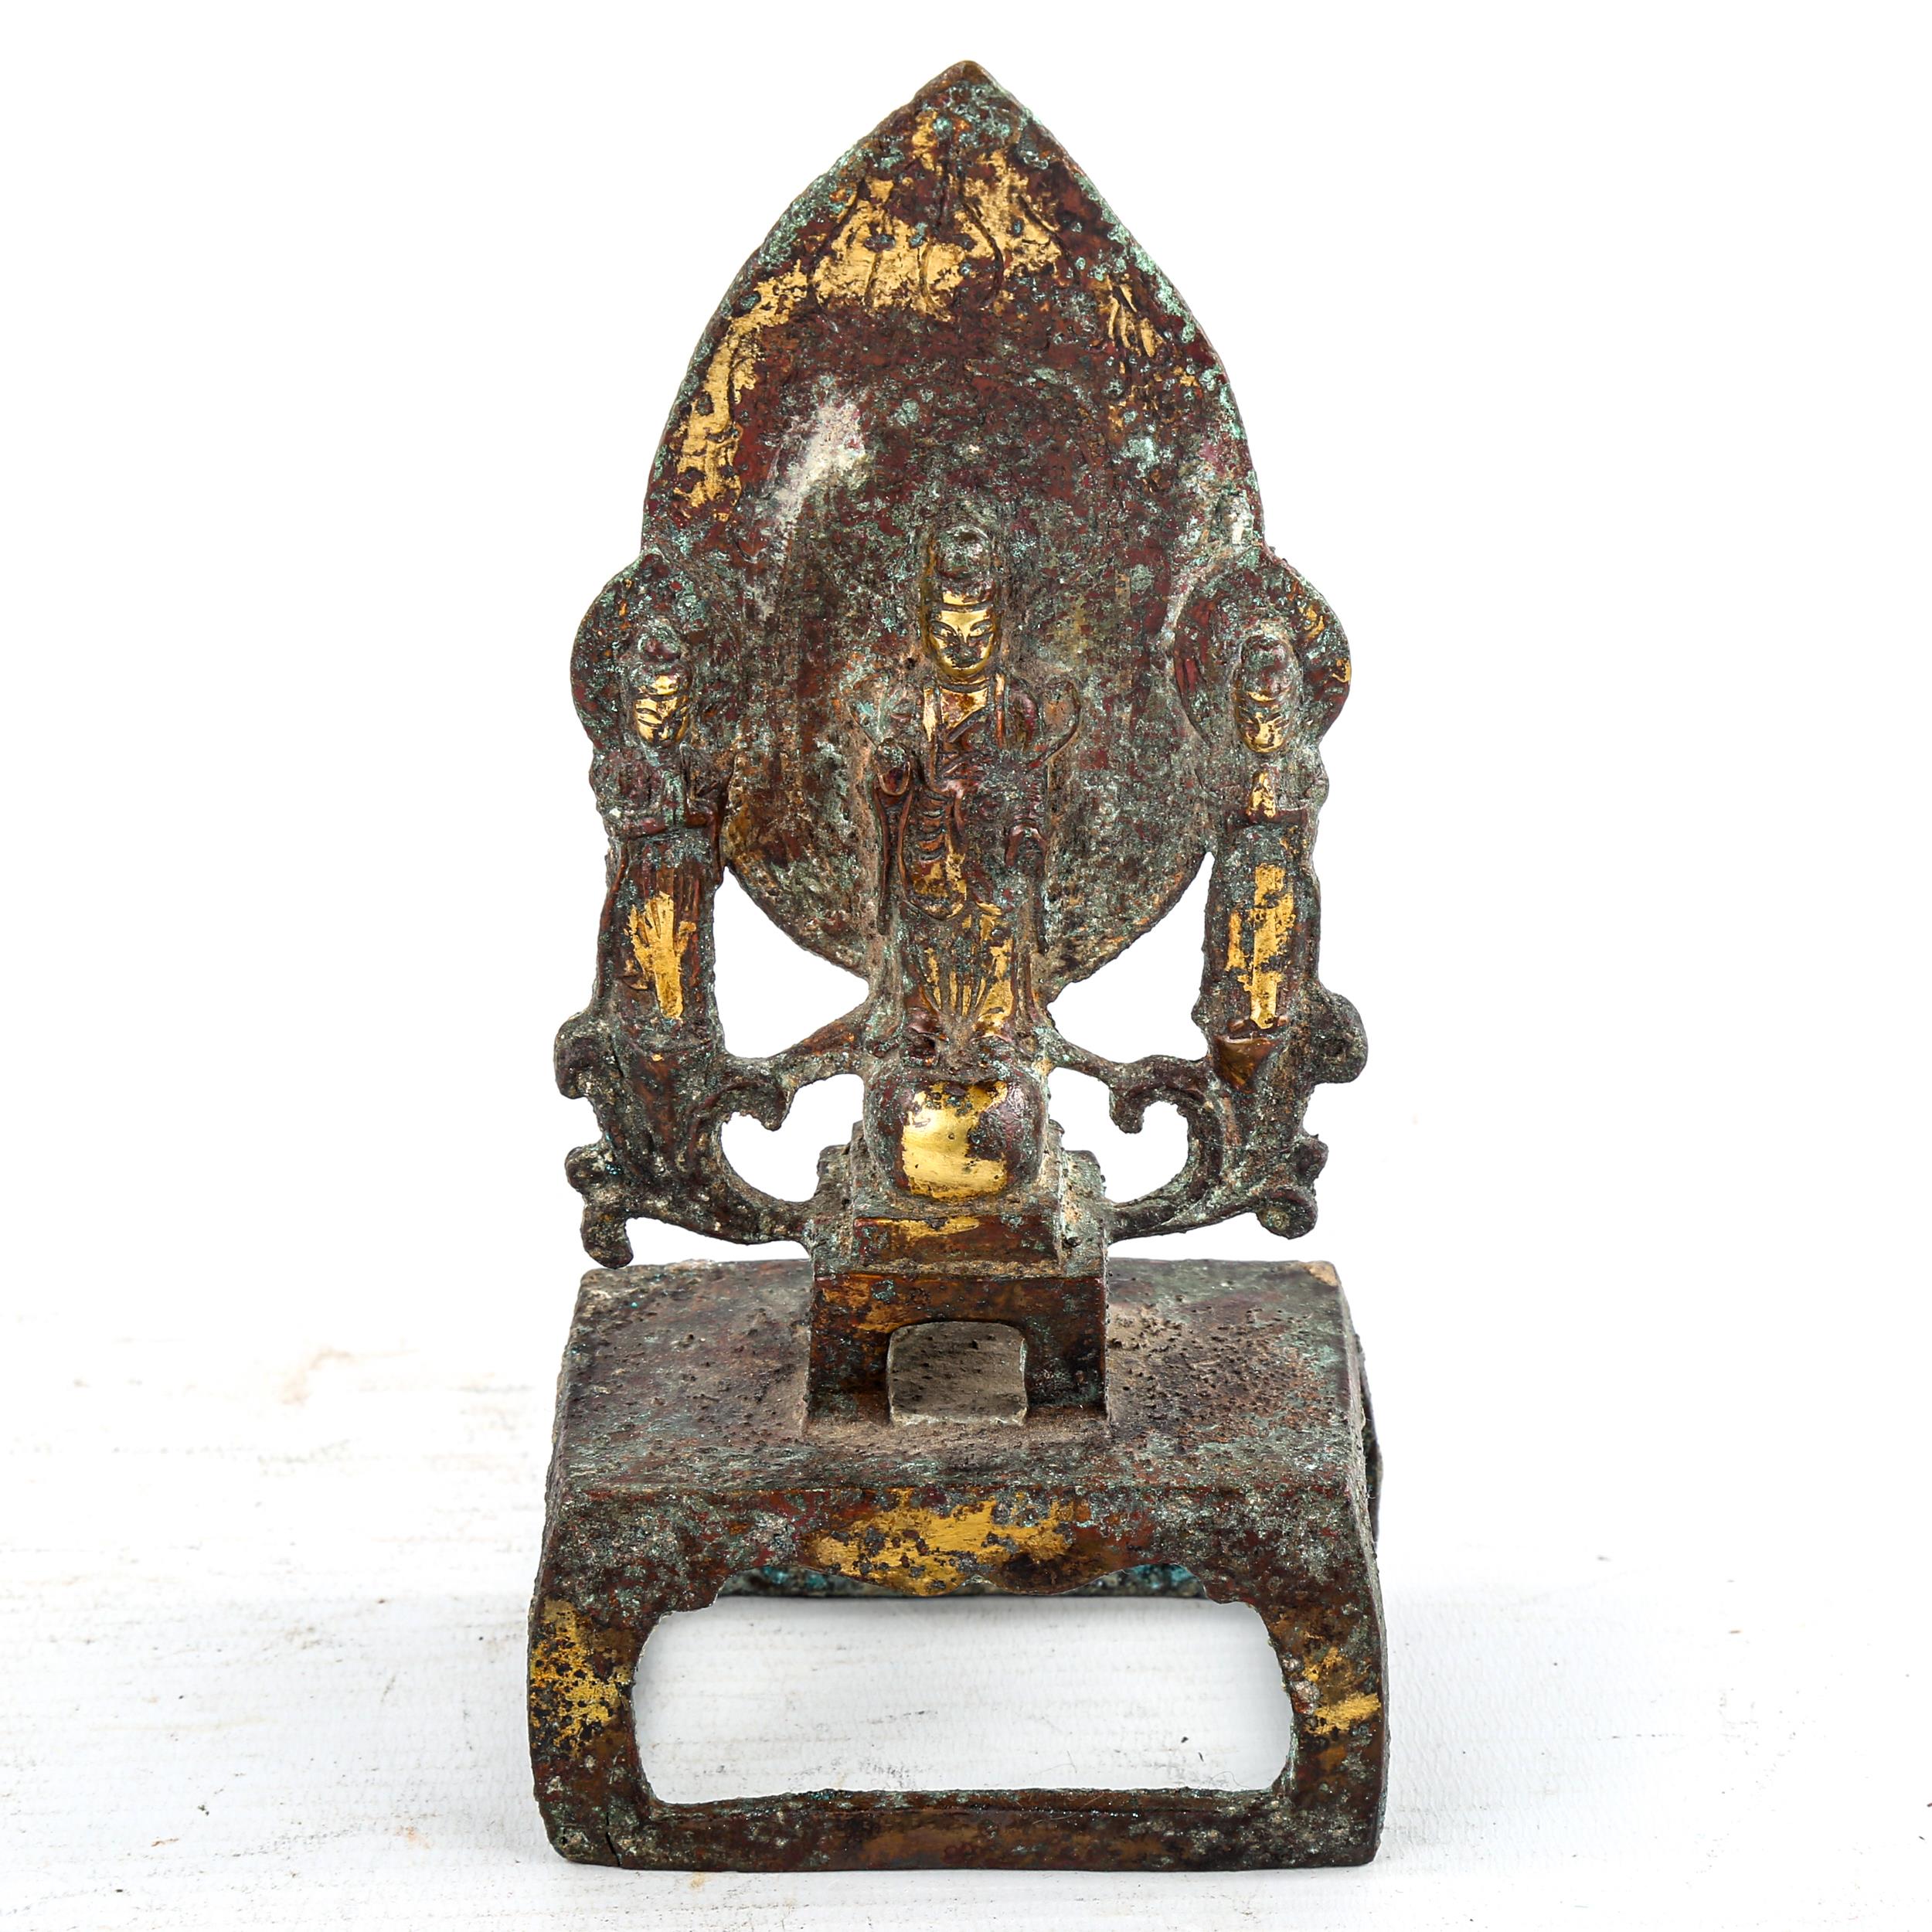 A Chinese verdigris bronze shrine, surmounted by Buddha figures, height 17cm